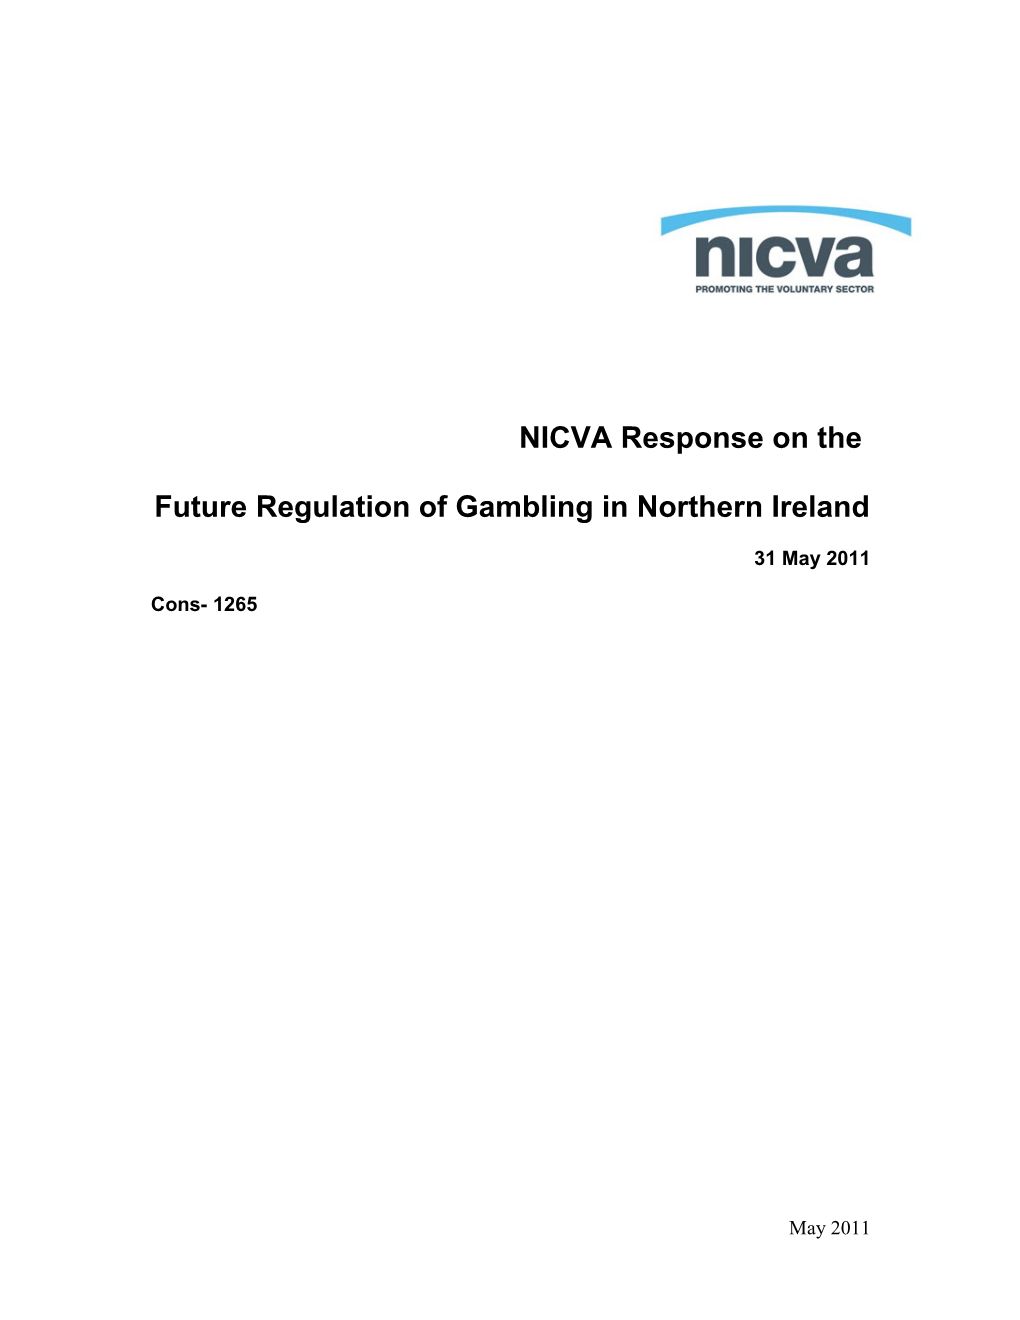 Future Regulation of Gambling in Northern Ireland